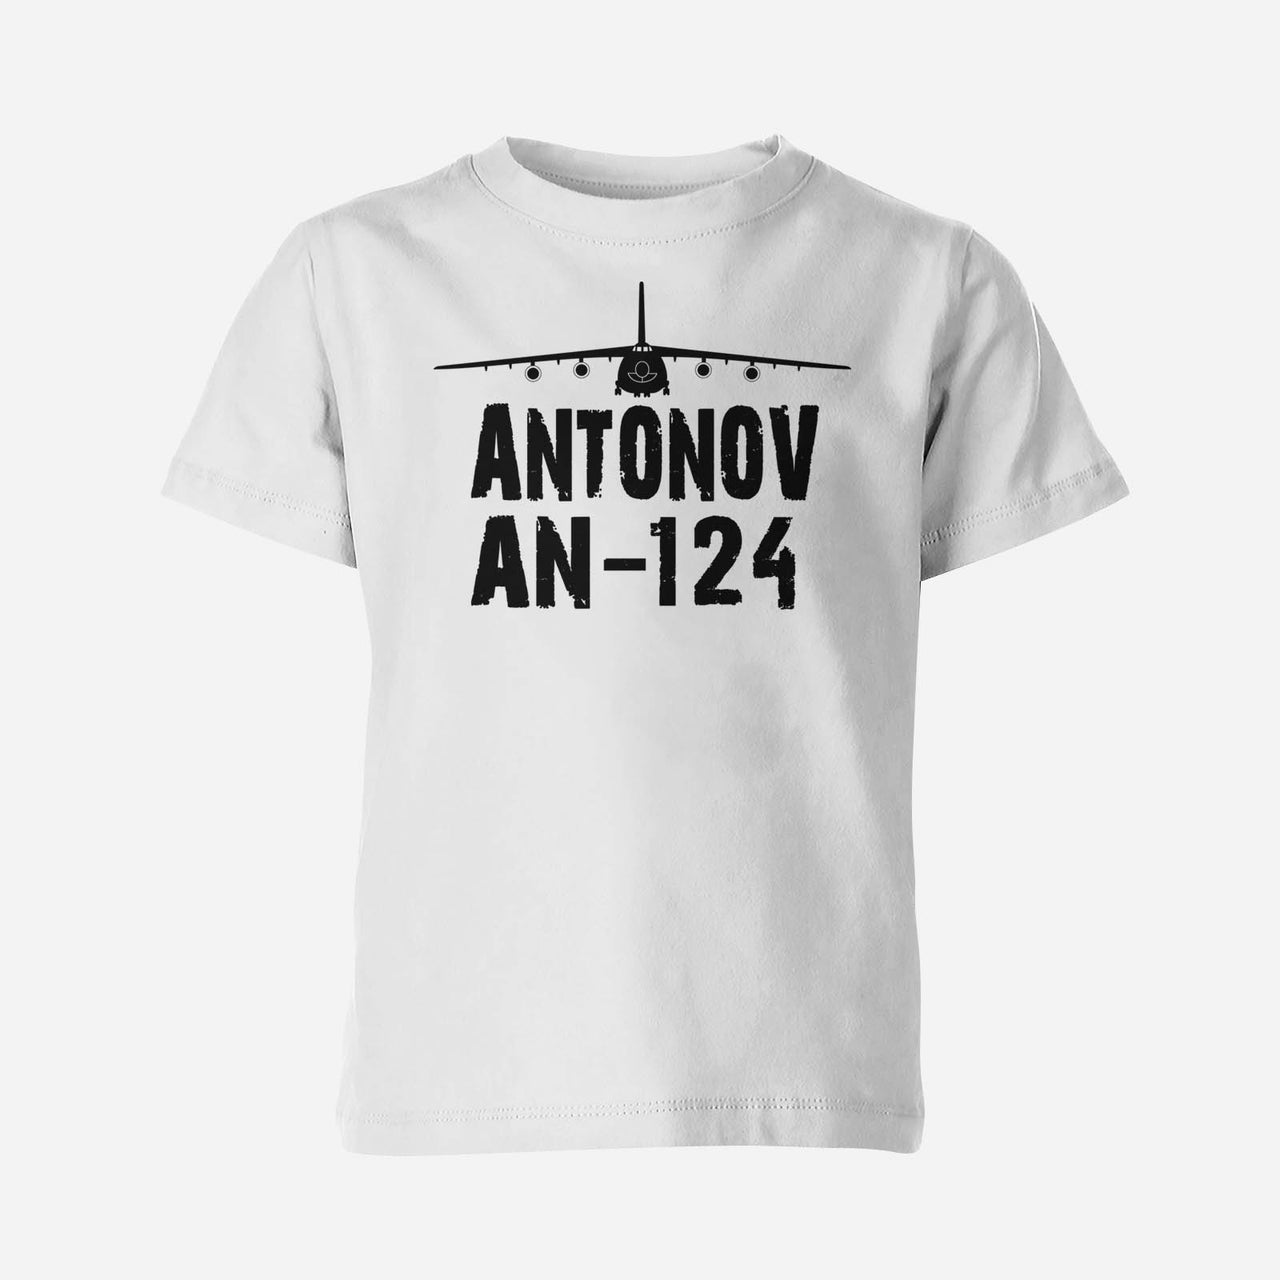 Antonov AN-124 & Plane Designed Children T-Shirts